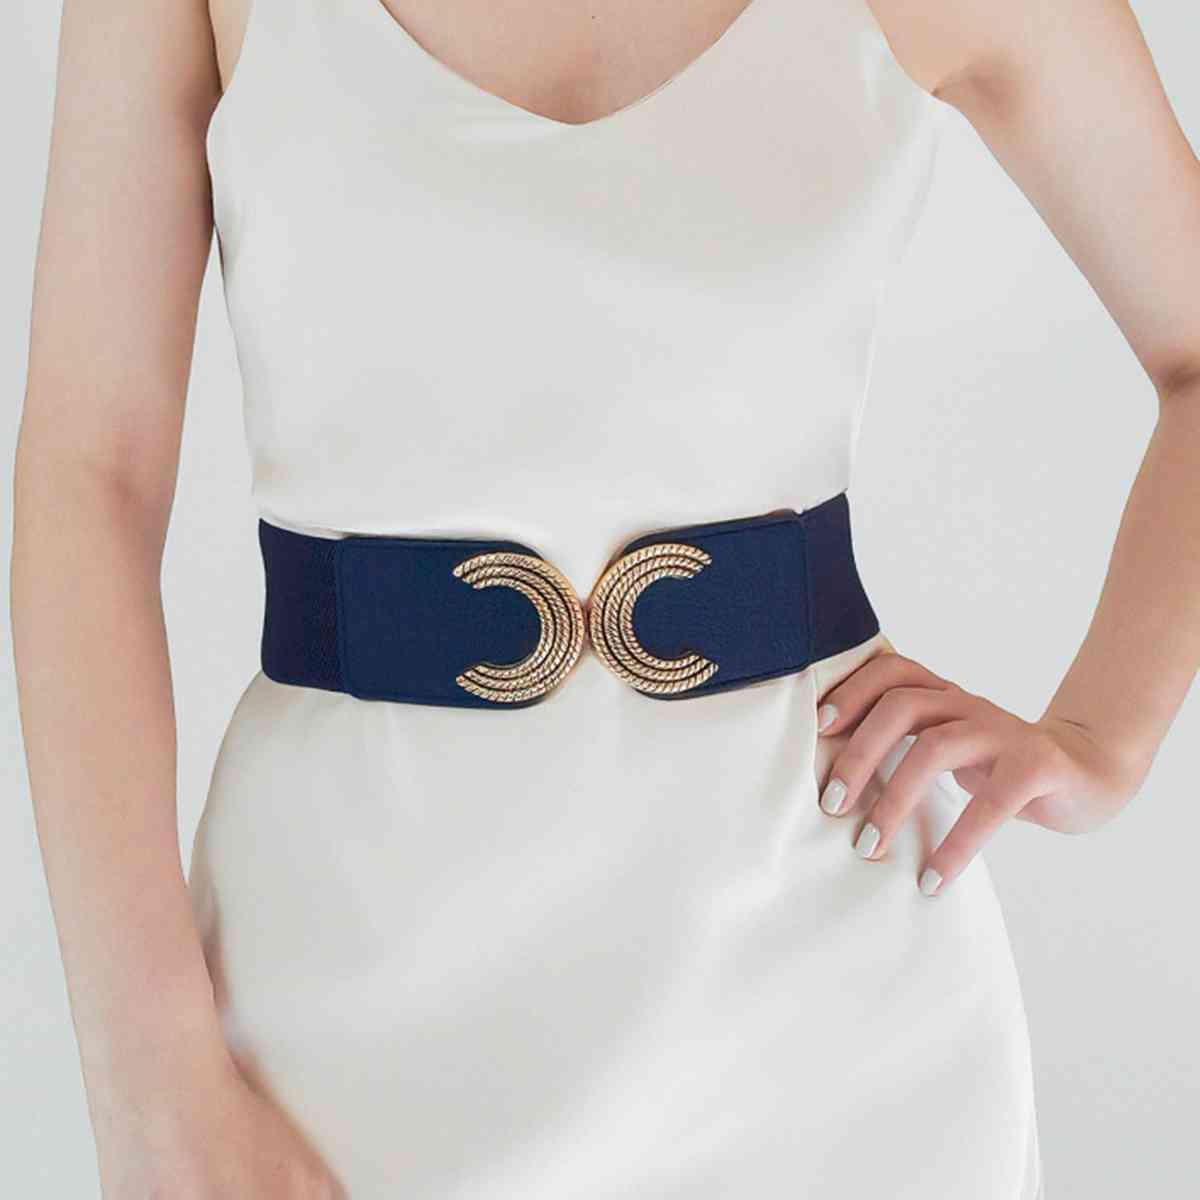 a woman wearing a white dress and a blue belt